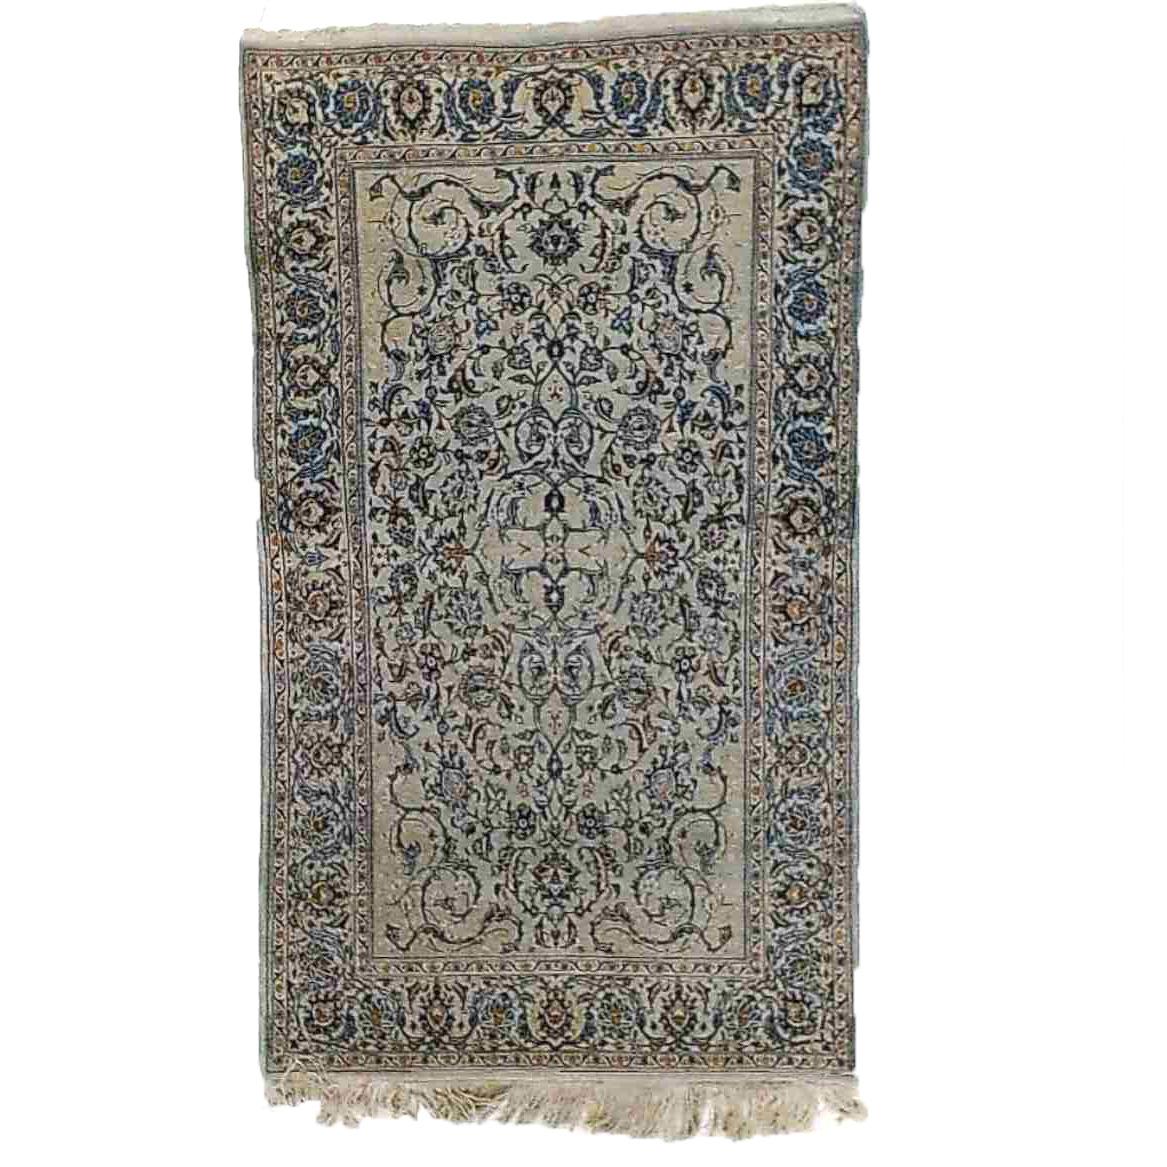 Antique Tabriz Oriental Wool Rug with Allover Floral Garden Design Circa 1940

Measures - 92